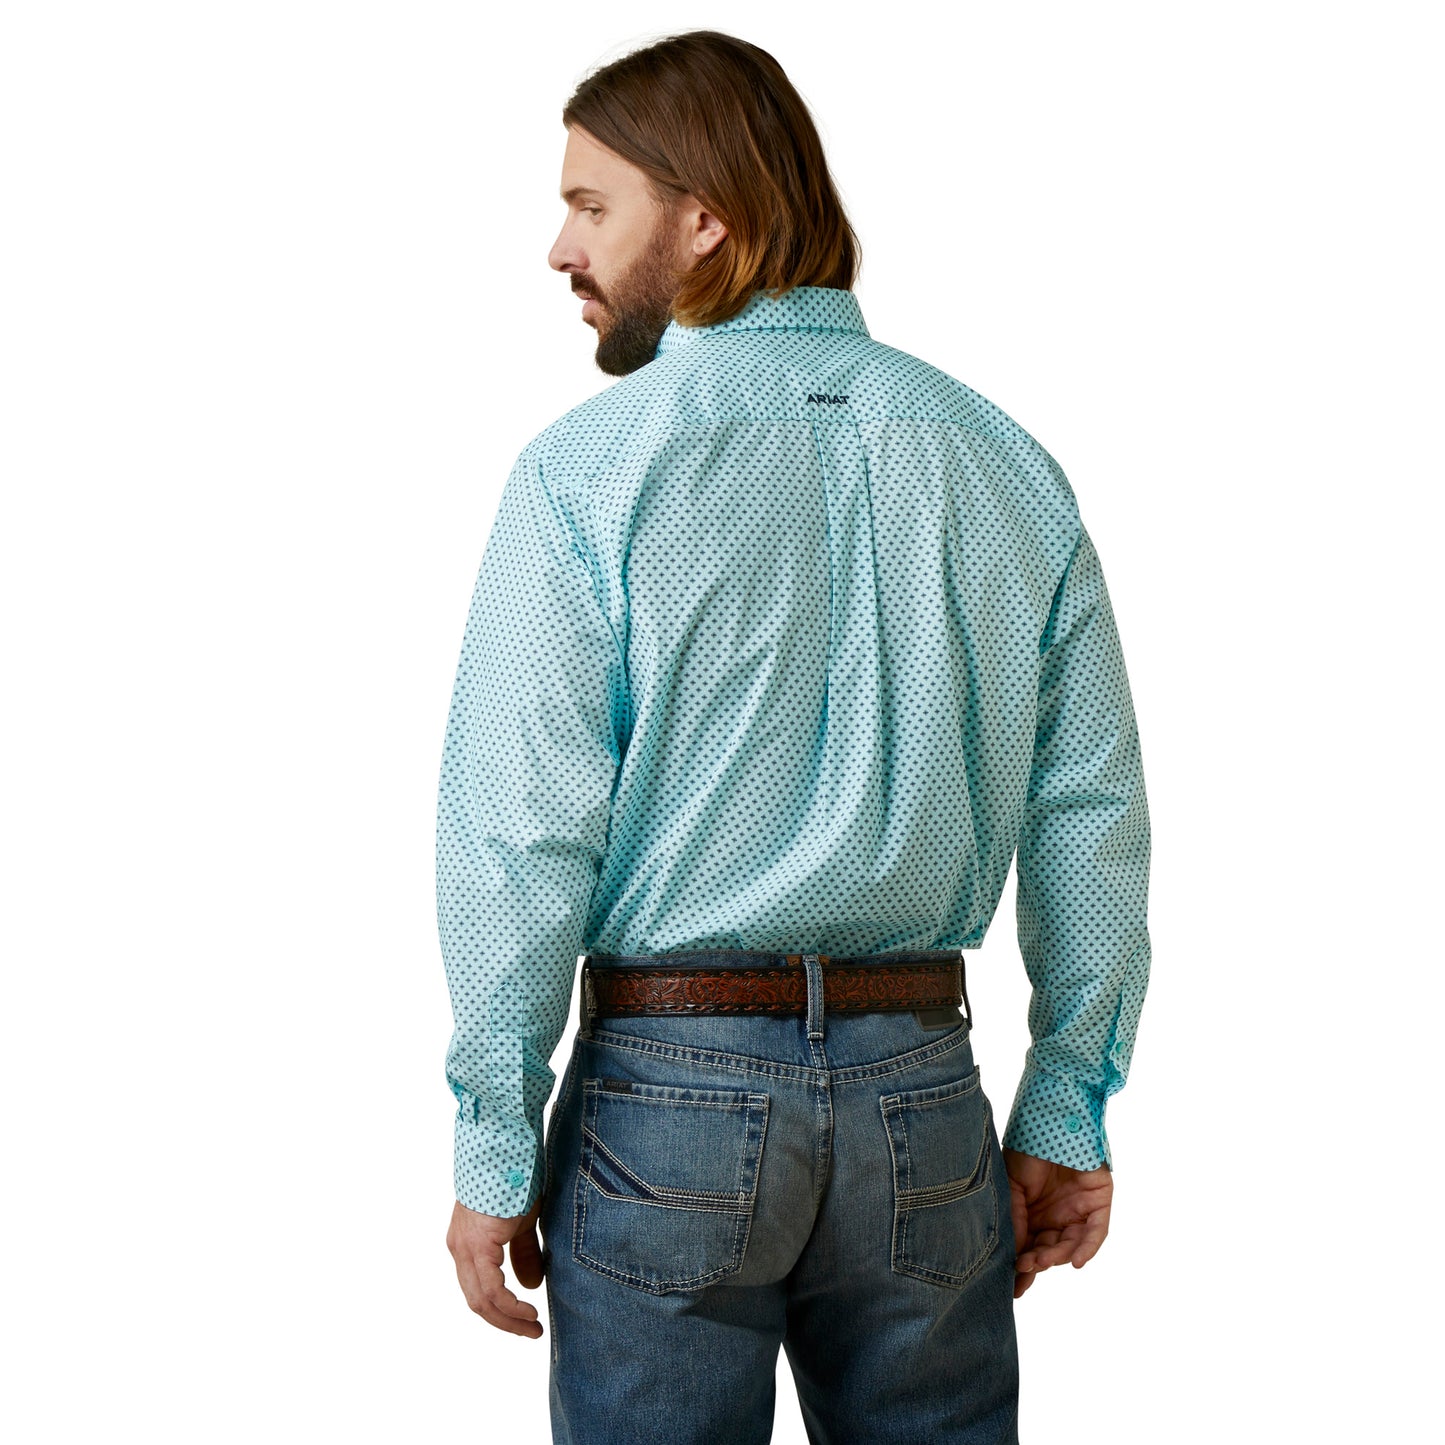 Ariat Men's Osburn Classic Fit Shirt Turquoise